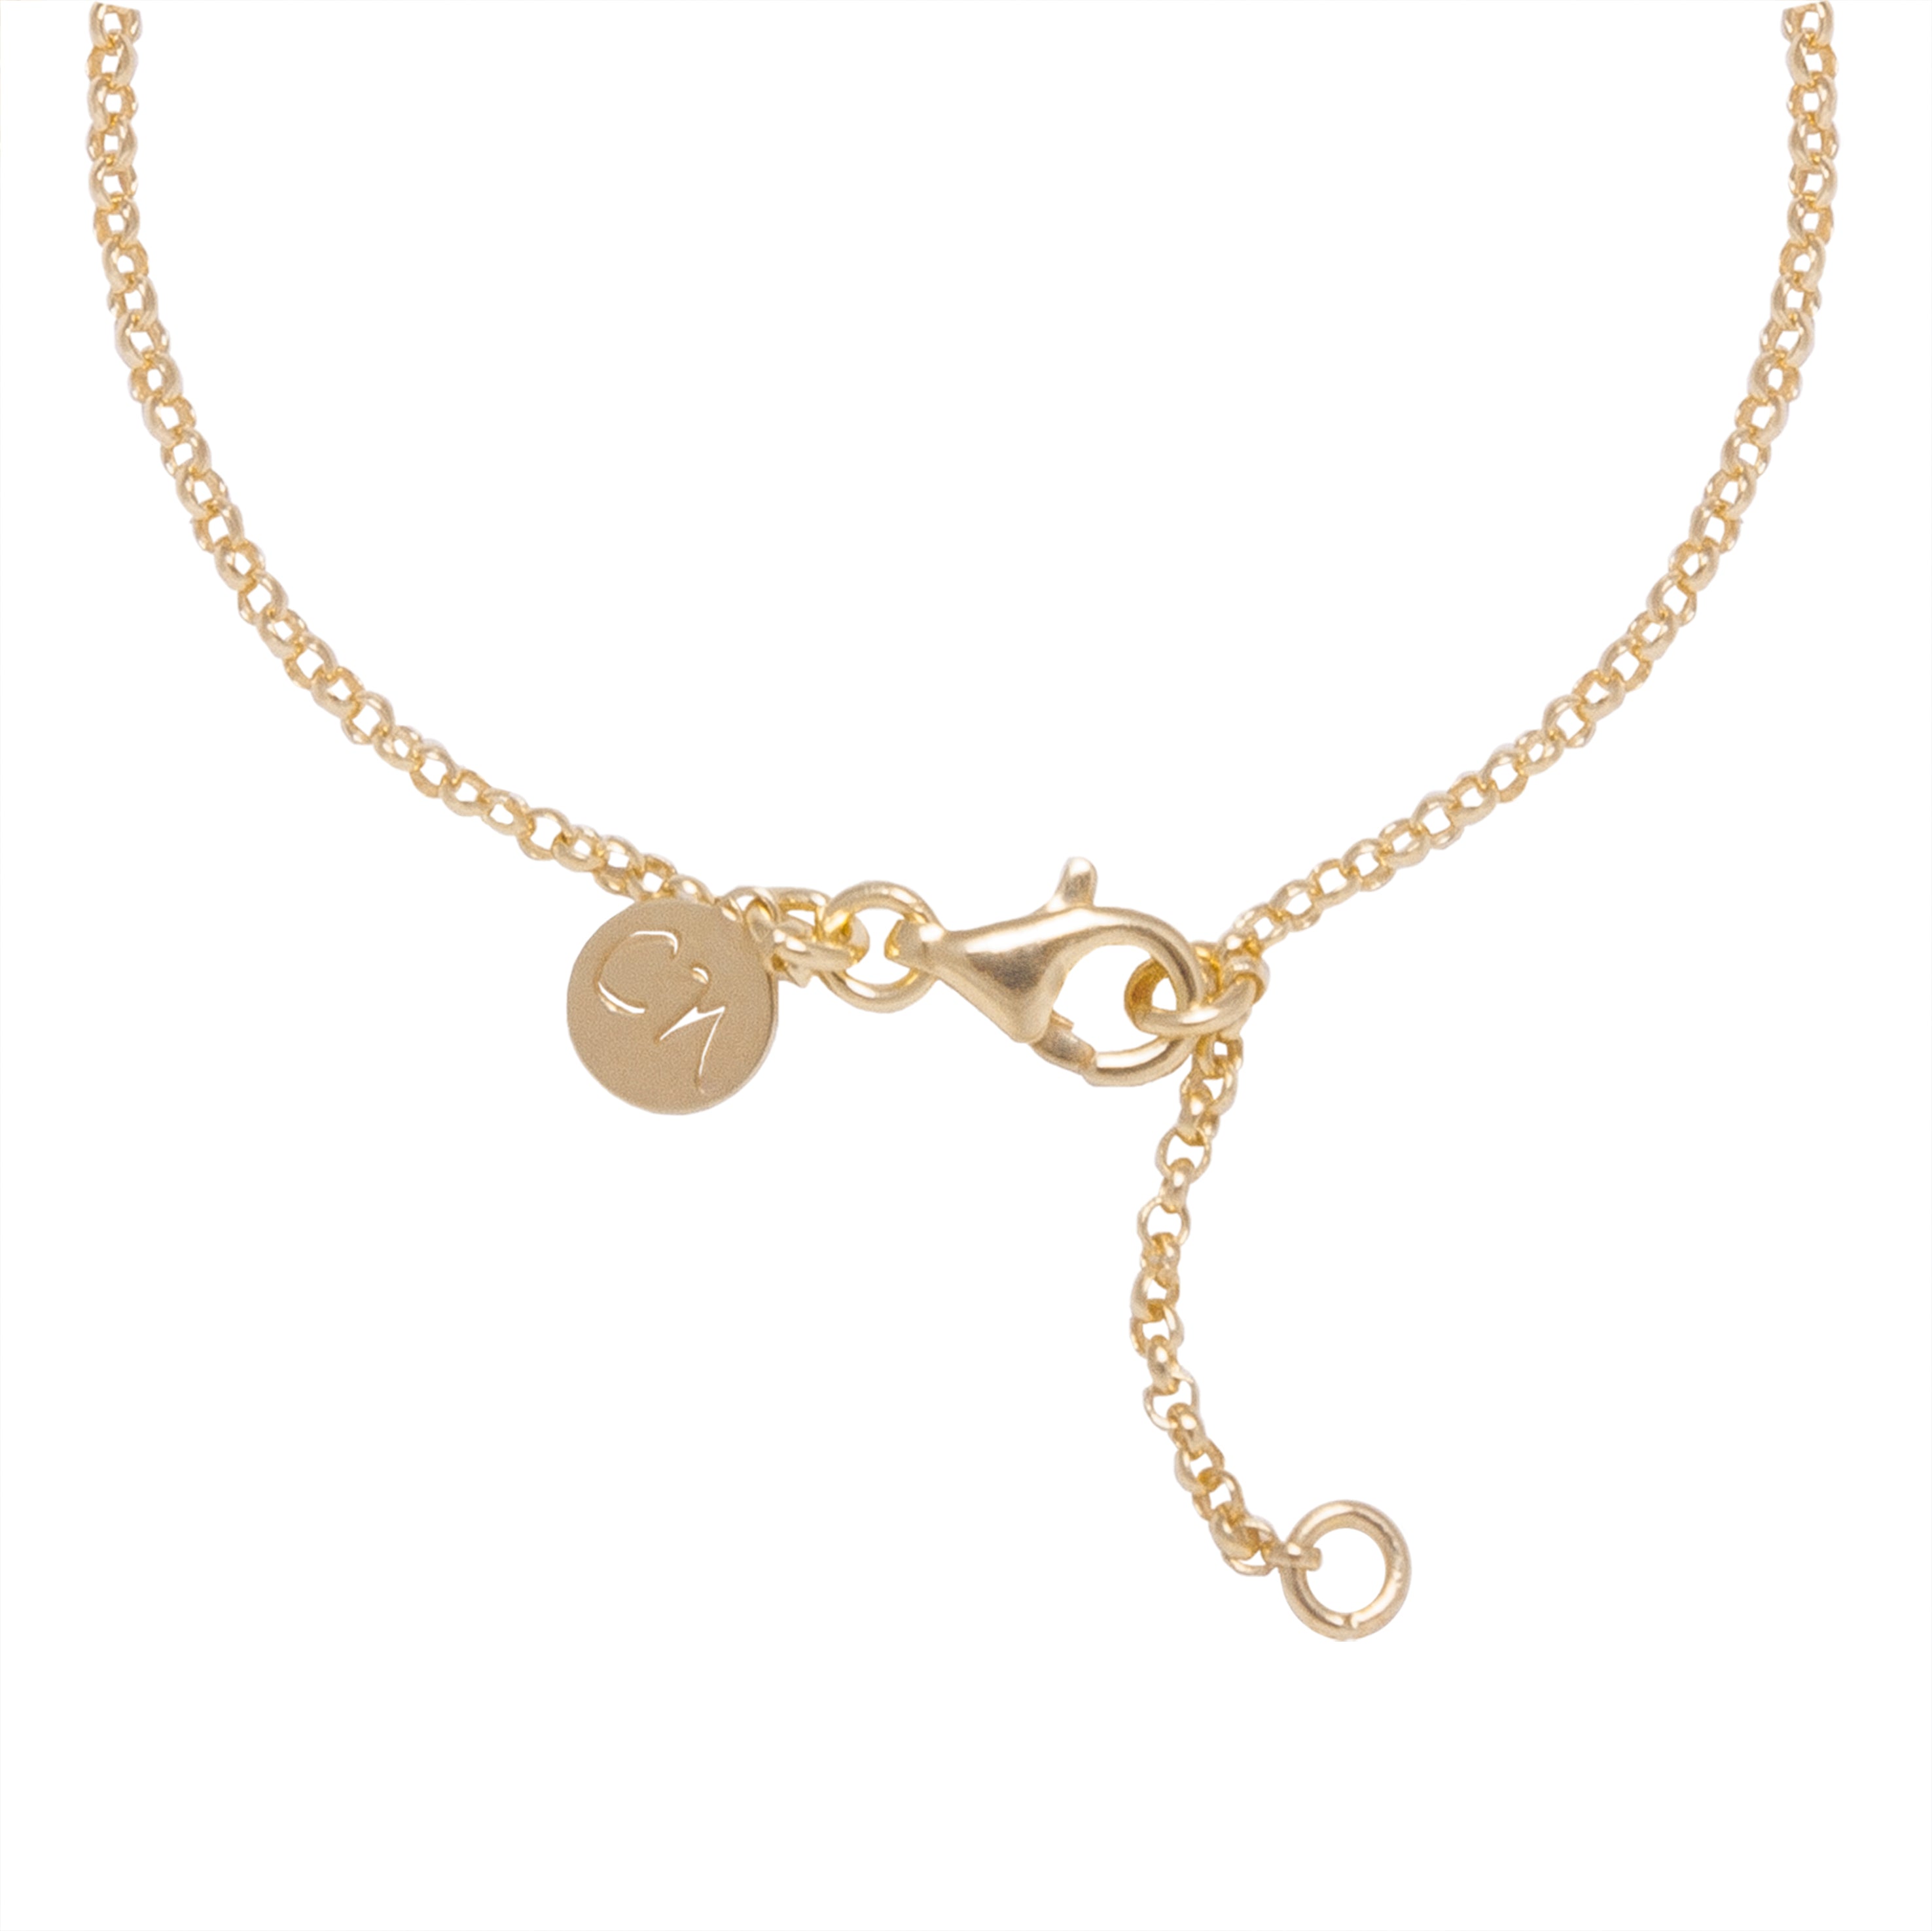 Claudia Navarro Jewelry - Bracelet Mandala3 / Gold